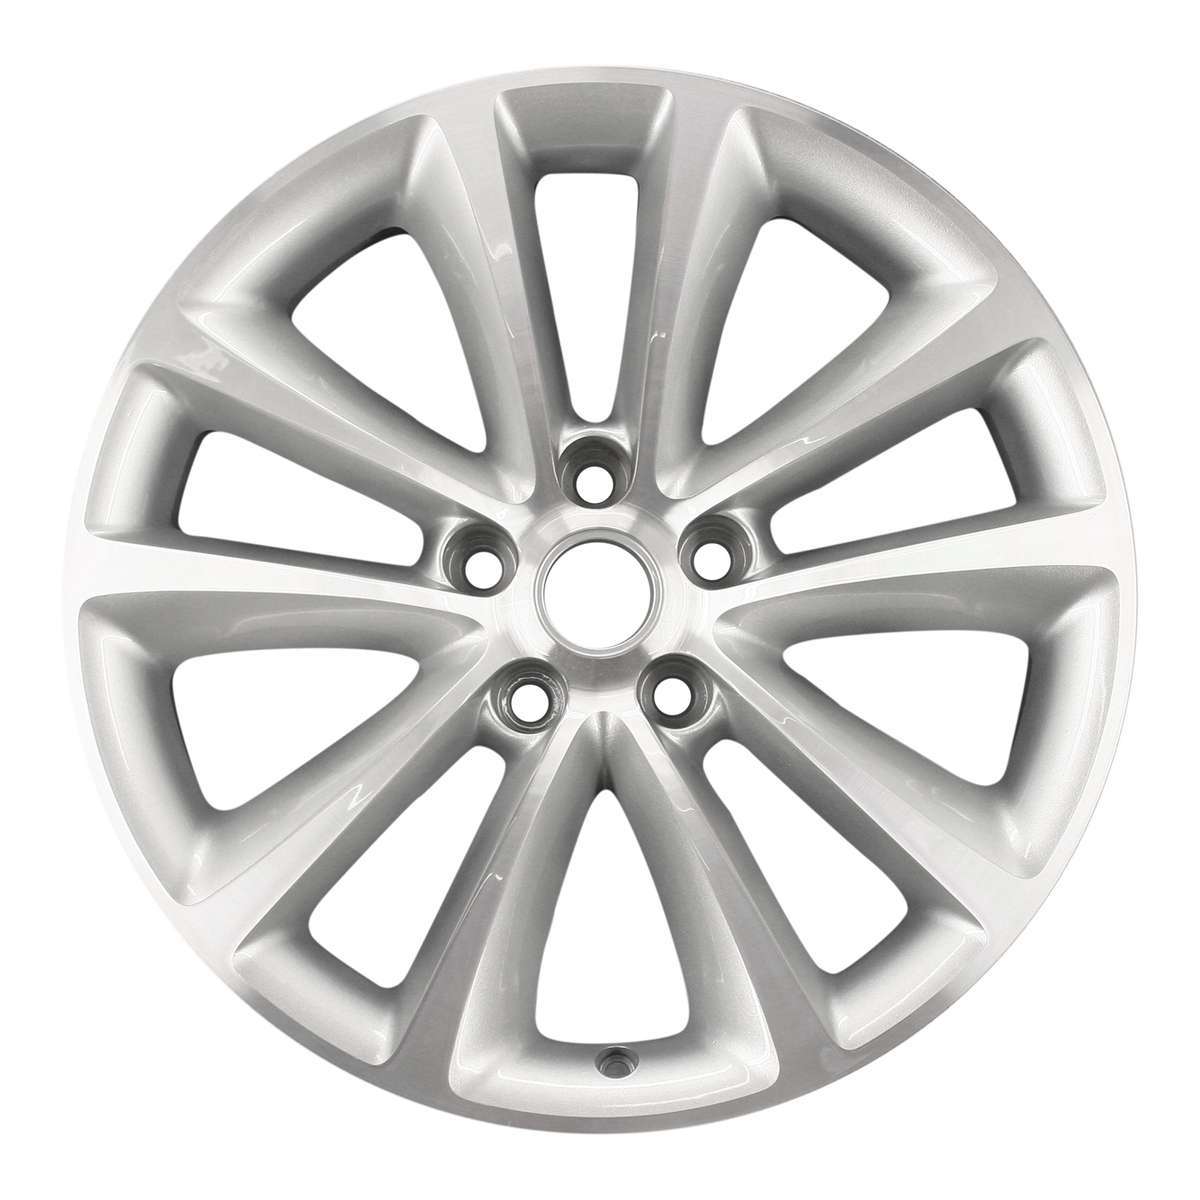 2015 Buick Verano New 18" Replacement Wheel Rim RW4111MS